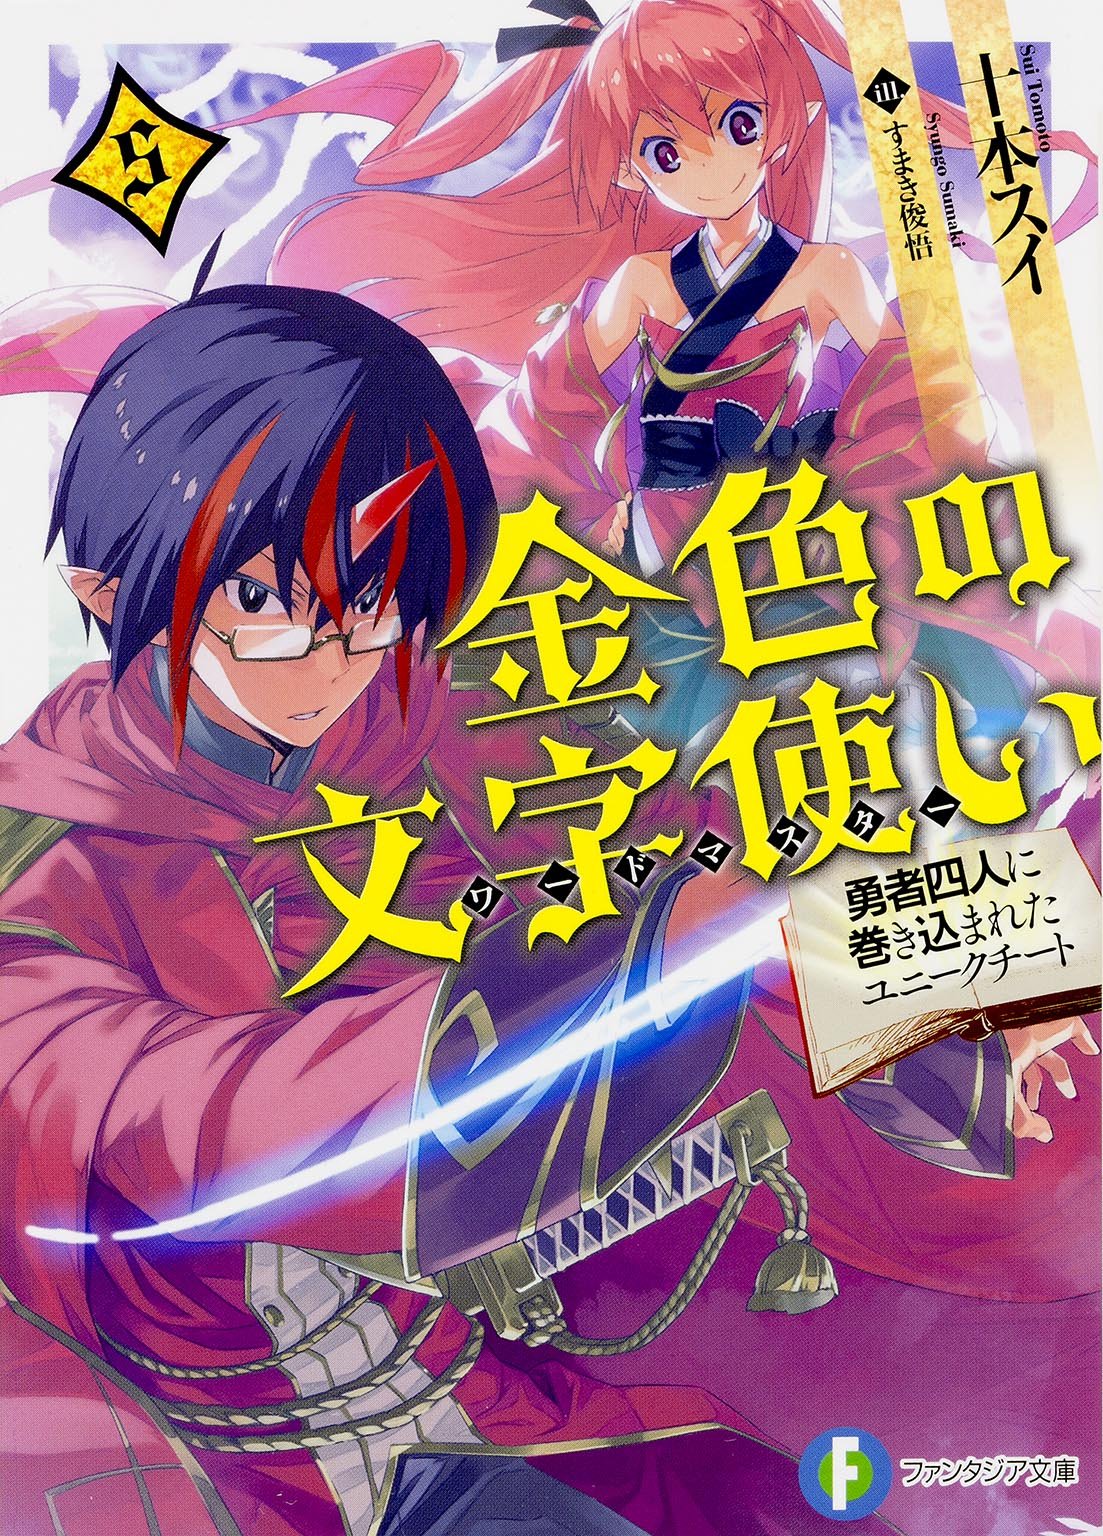 Konjiki no Word Master - Volume 5